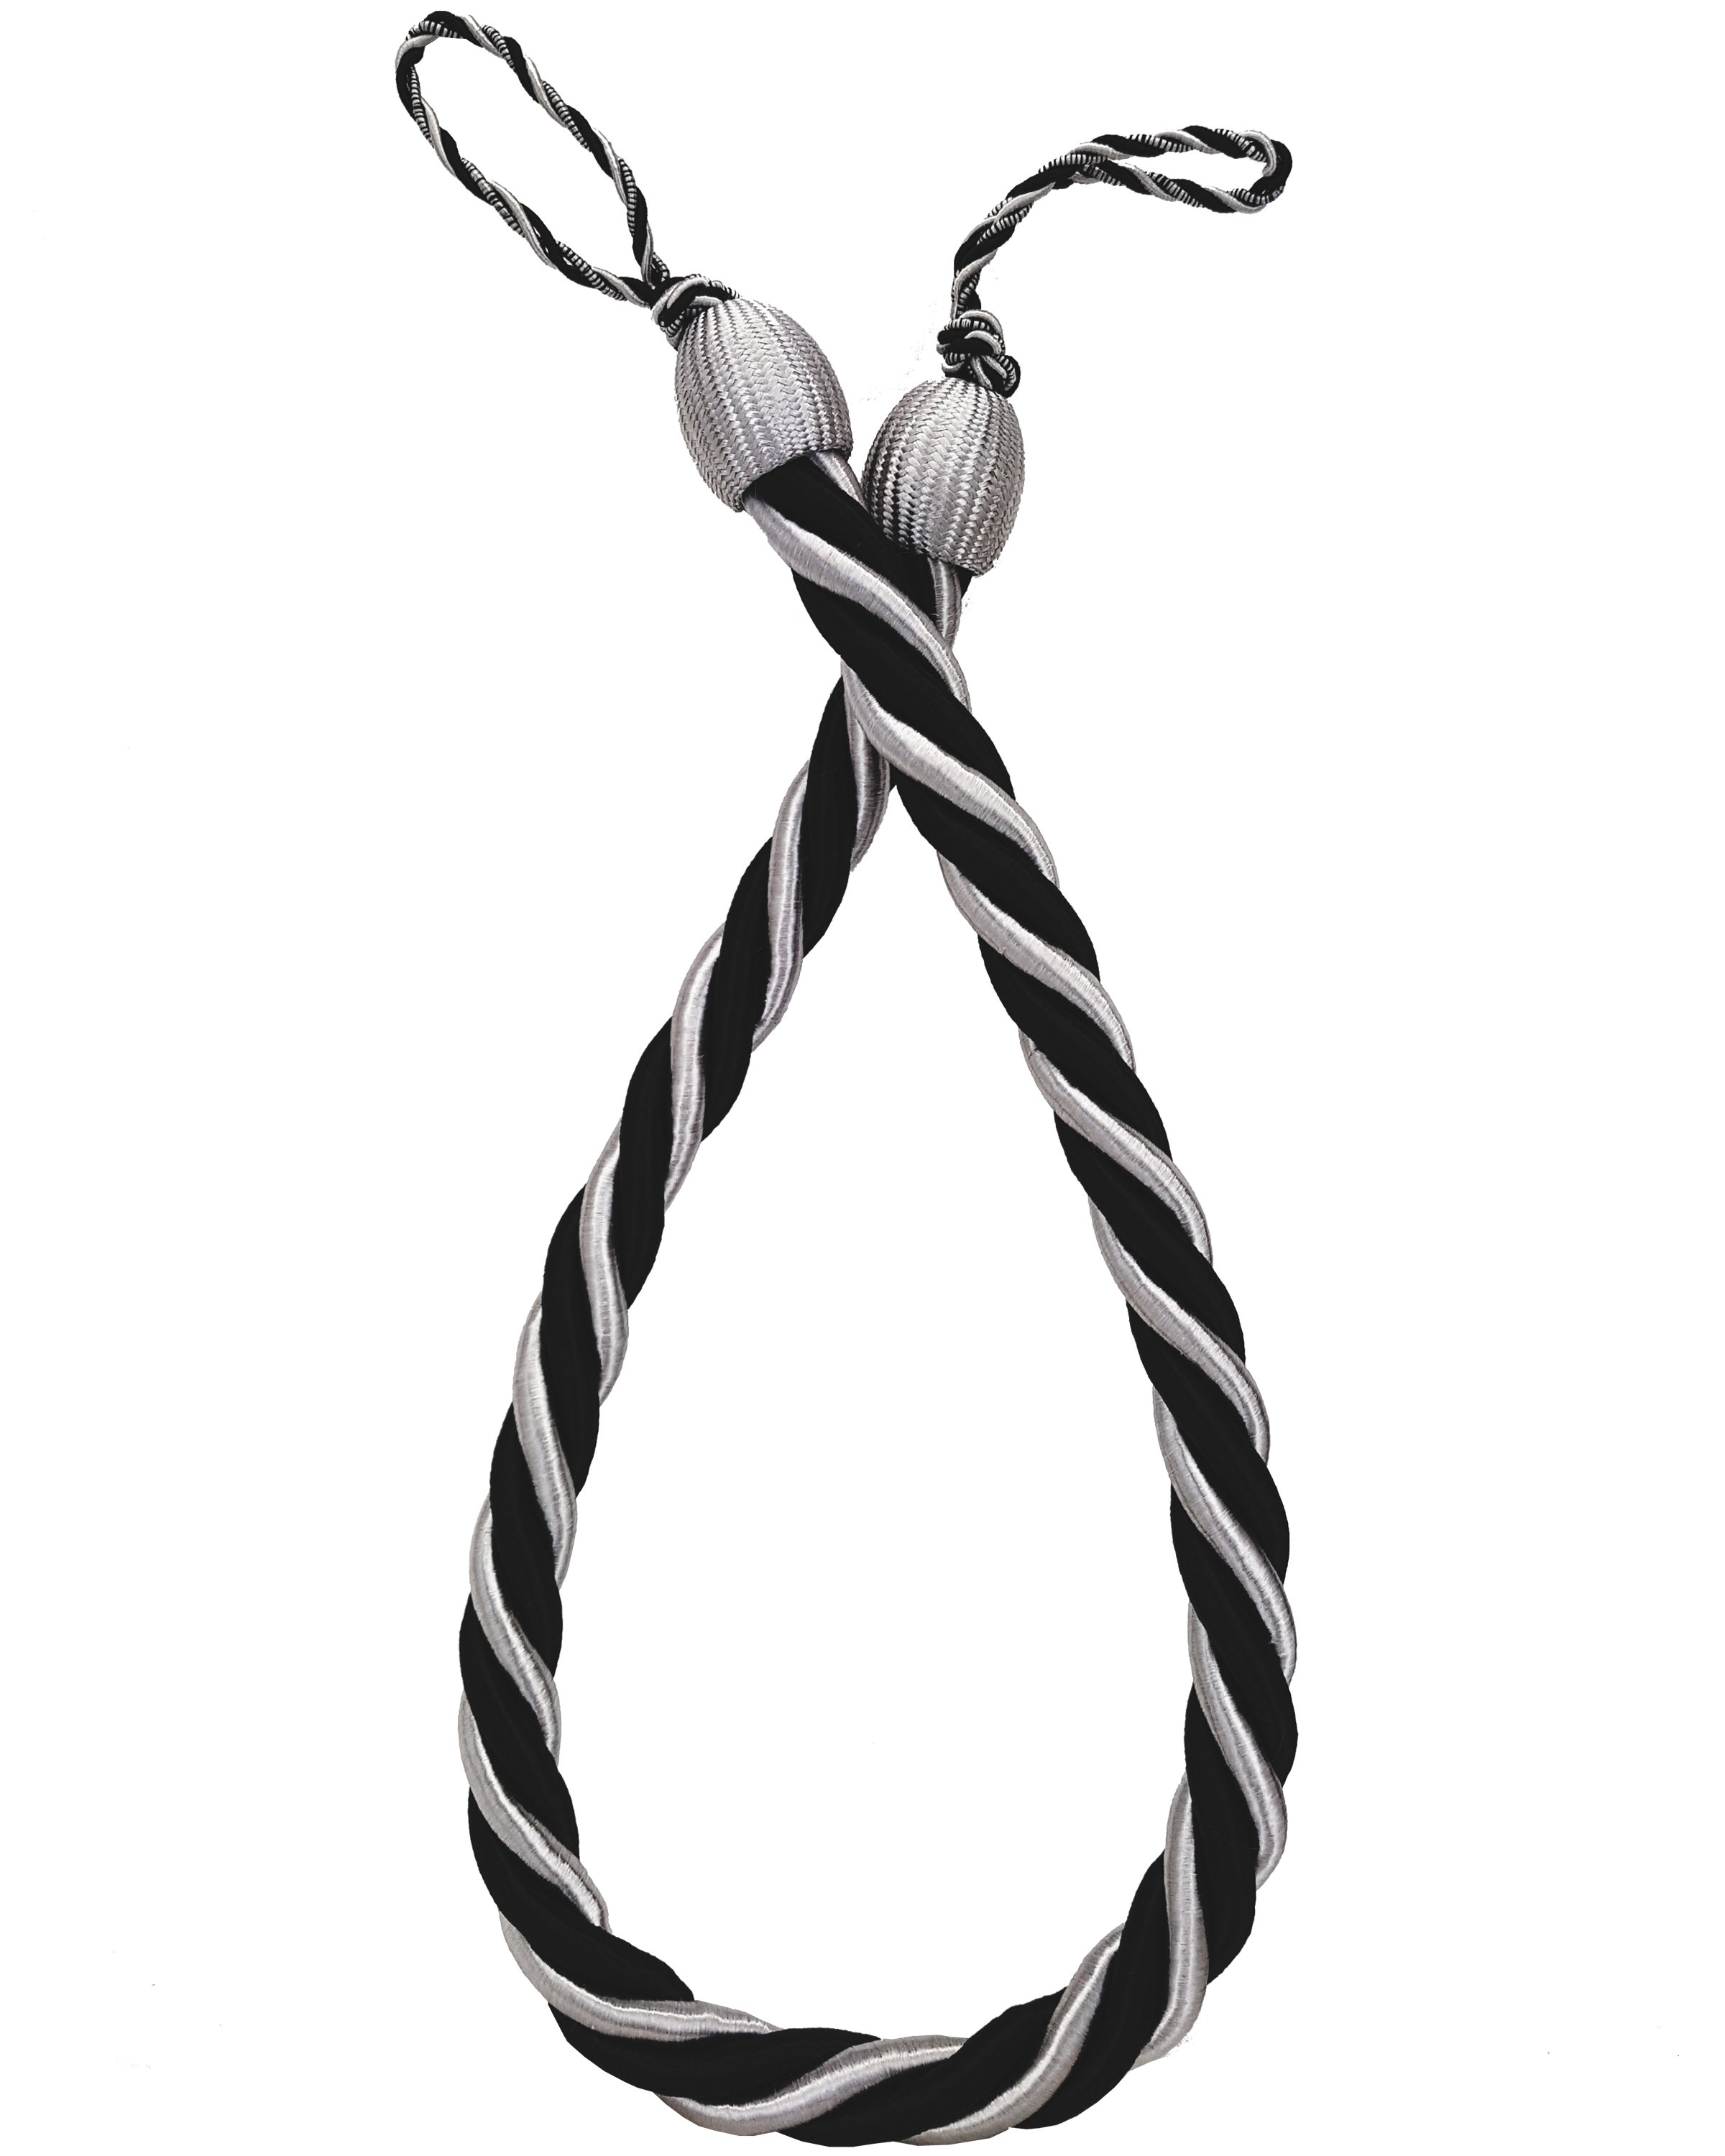 PAIR 2 pieces Curtain Tie Backs  rope twist - Black / Silver 85cm